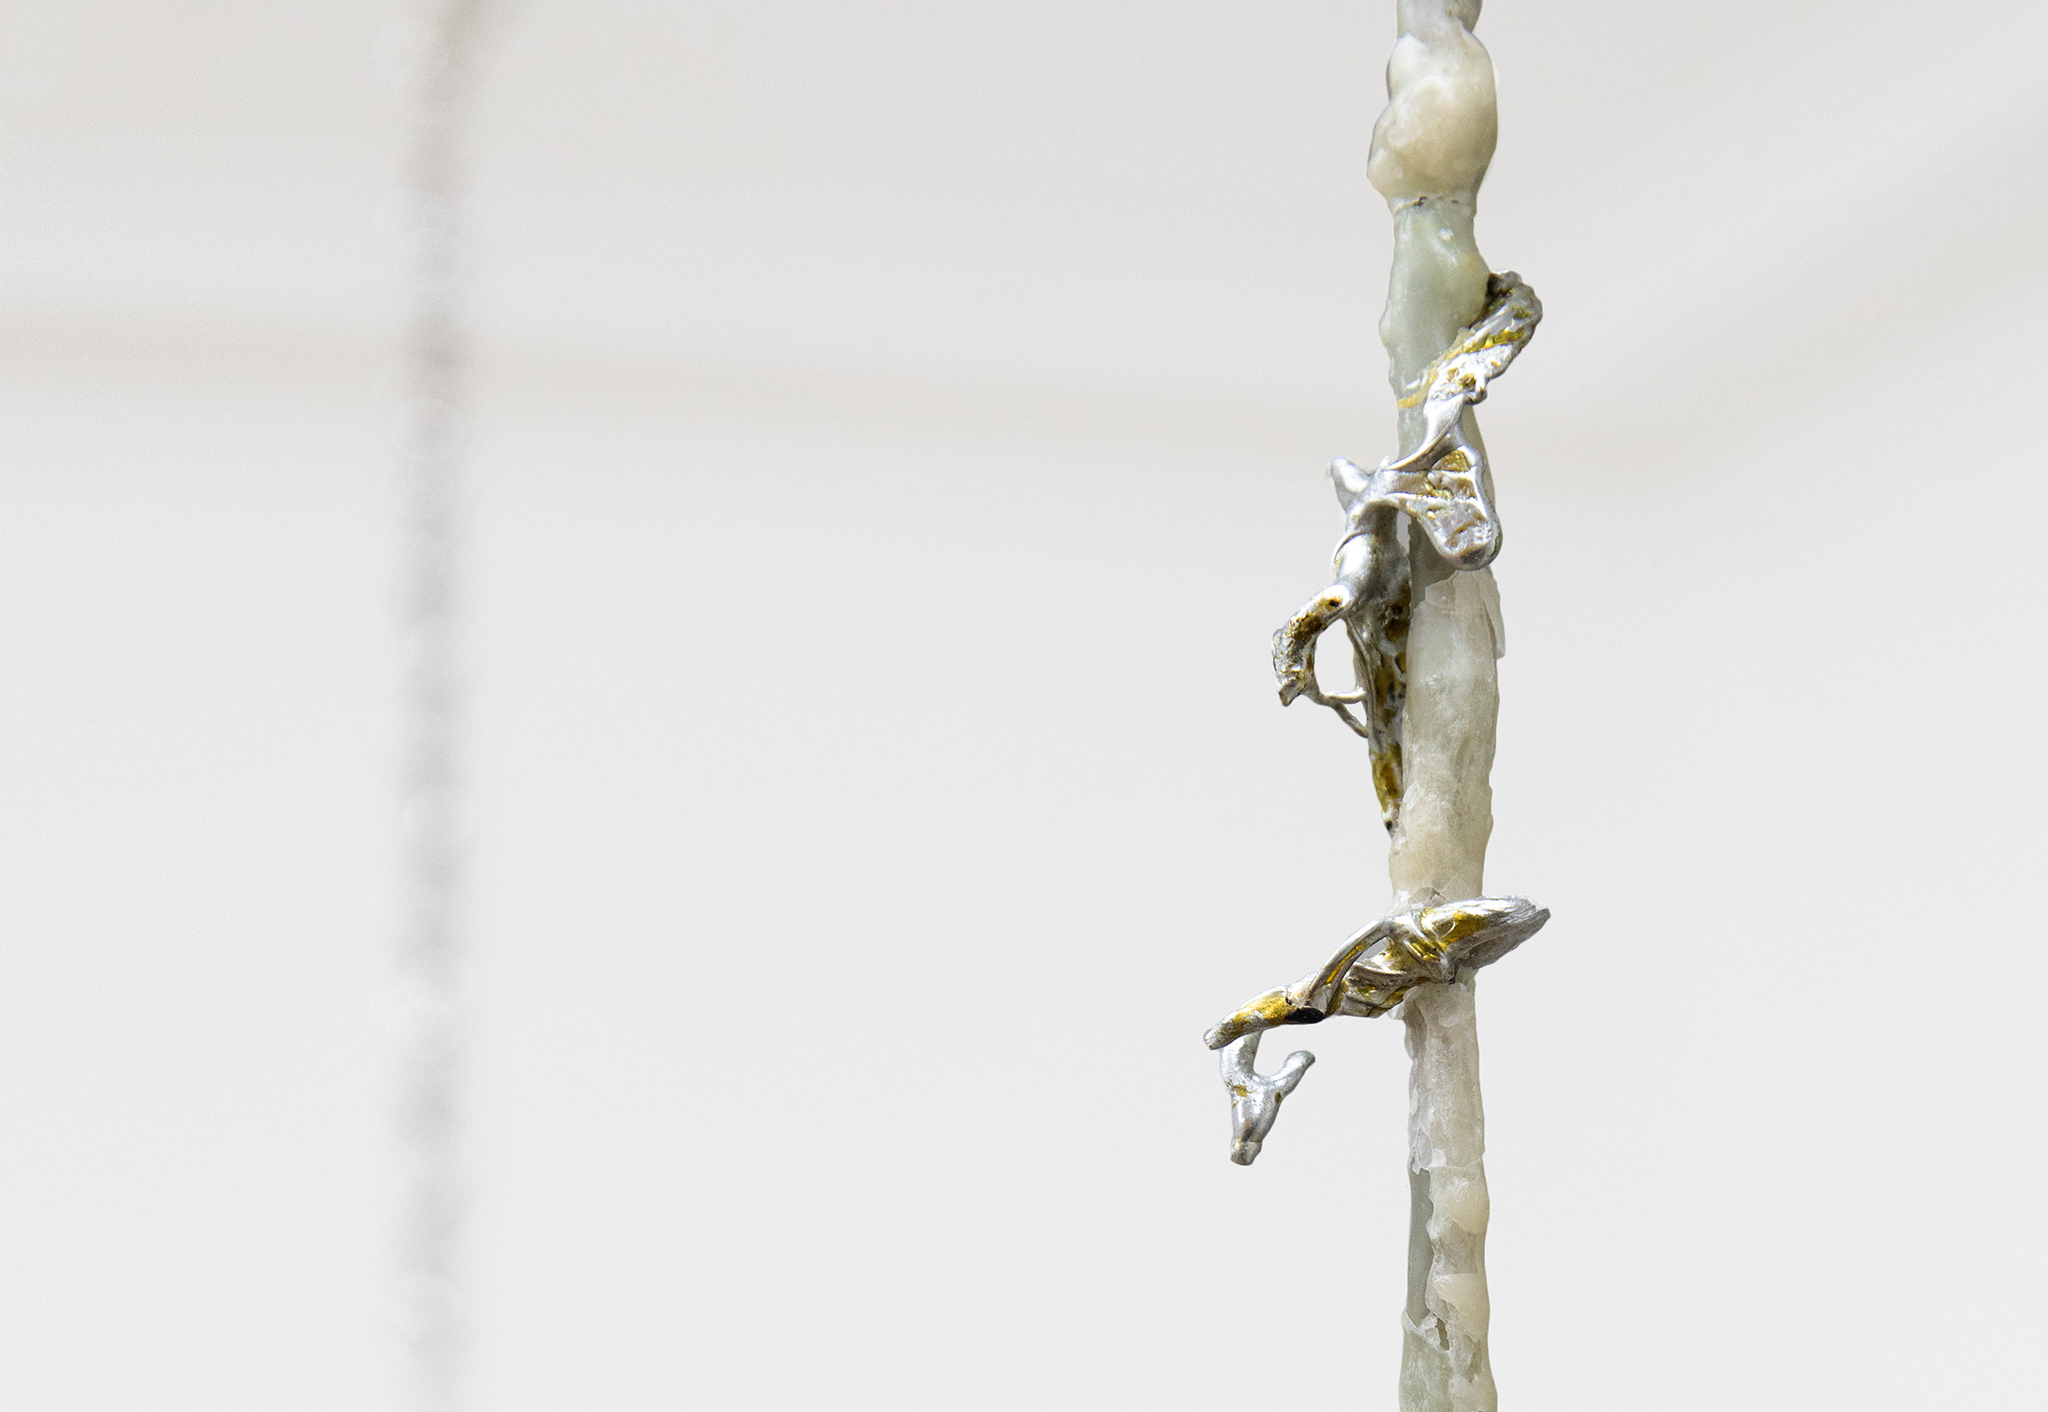 GrÃ¼ner Vogelius,"The time after, after", 2022, Plexiglass, jewellery locks, cord, wax, silver, 107.0 x 83.0 x 0.5 cm